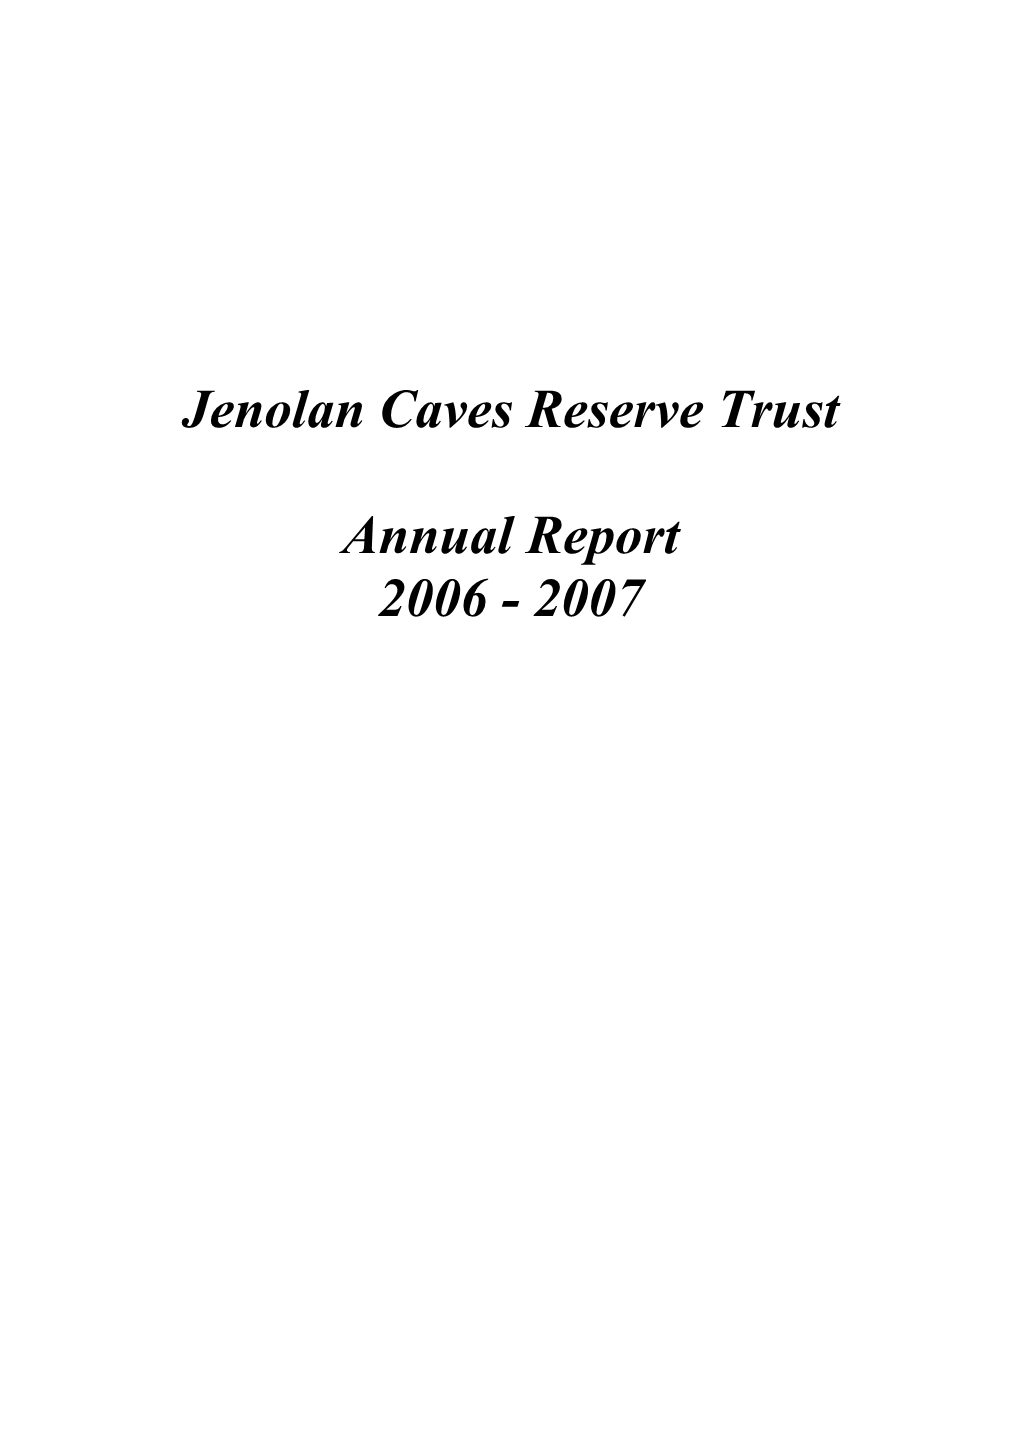 Jenolan Caves Reserve Trust Annual Report 2006